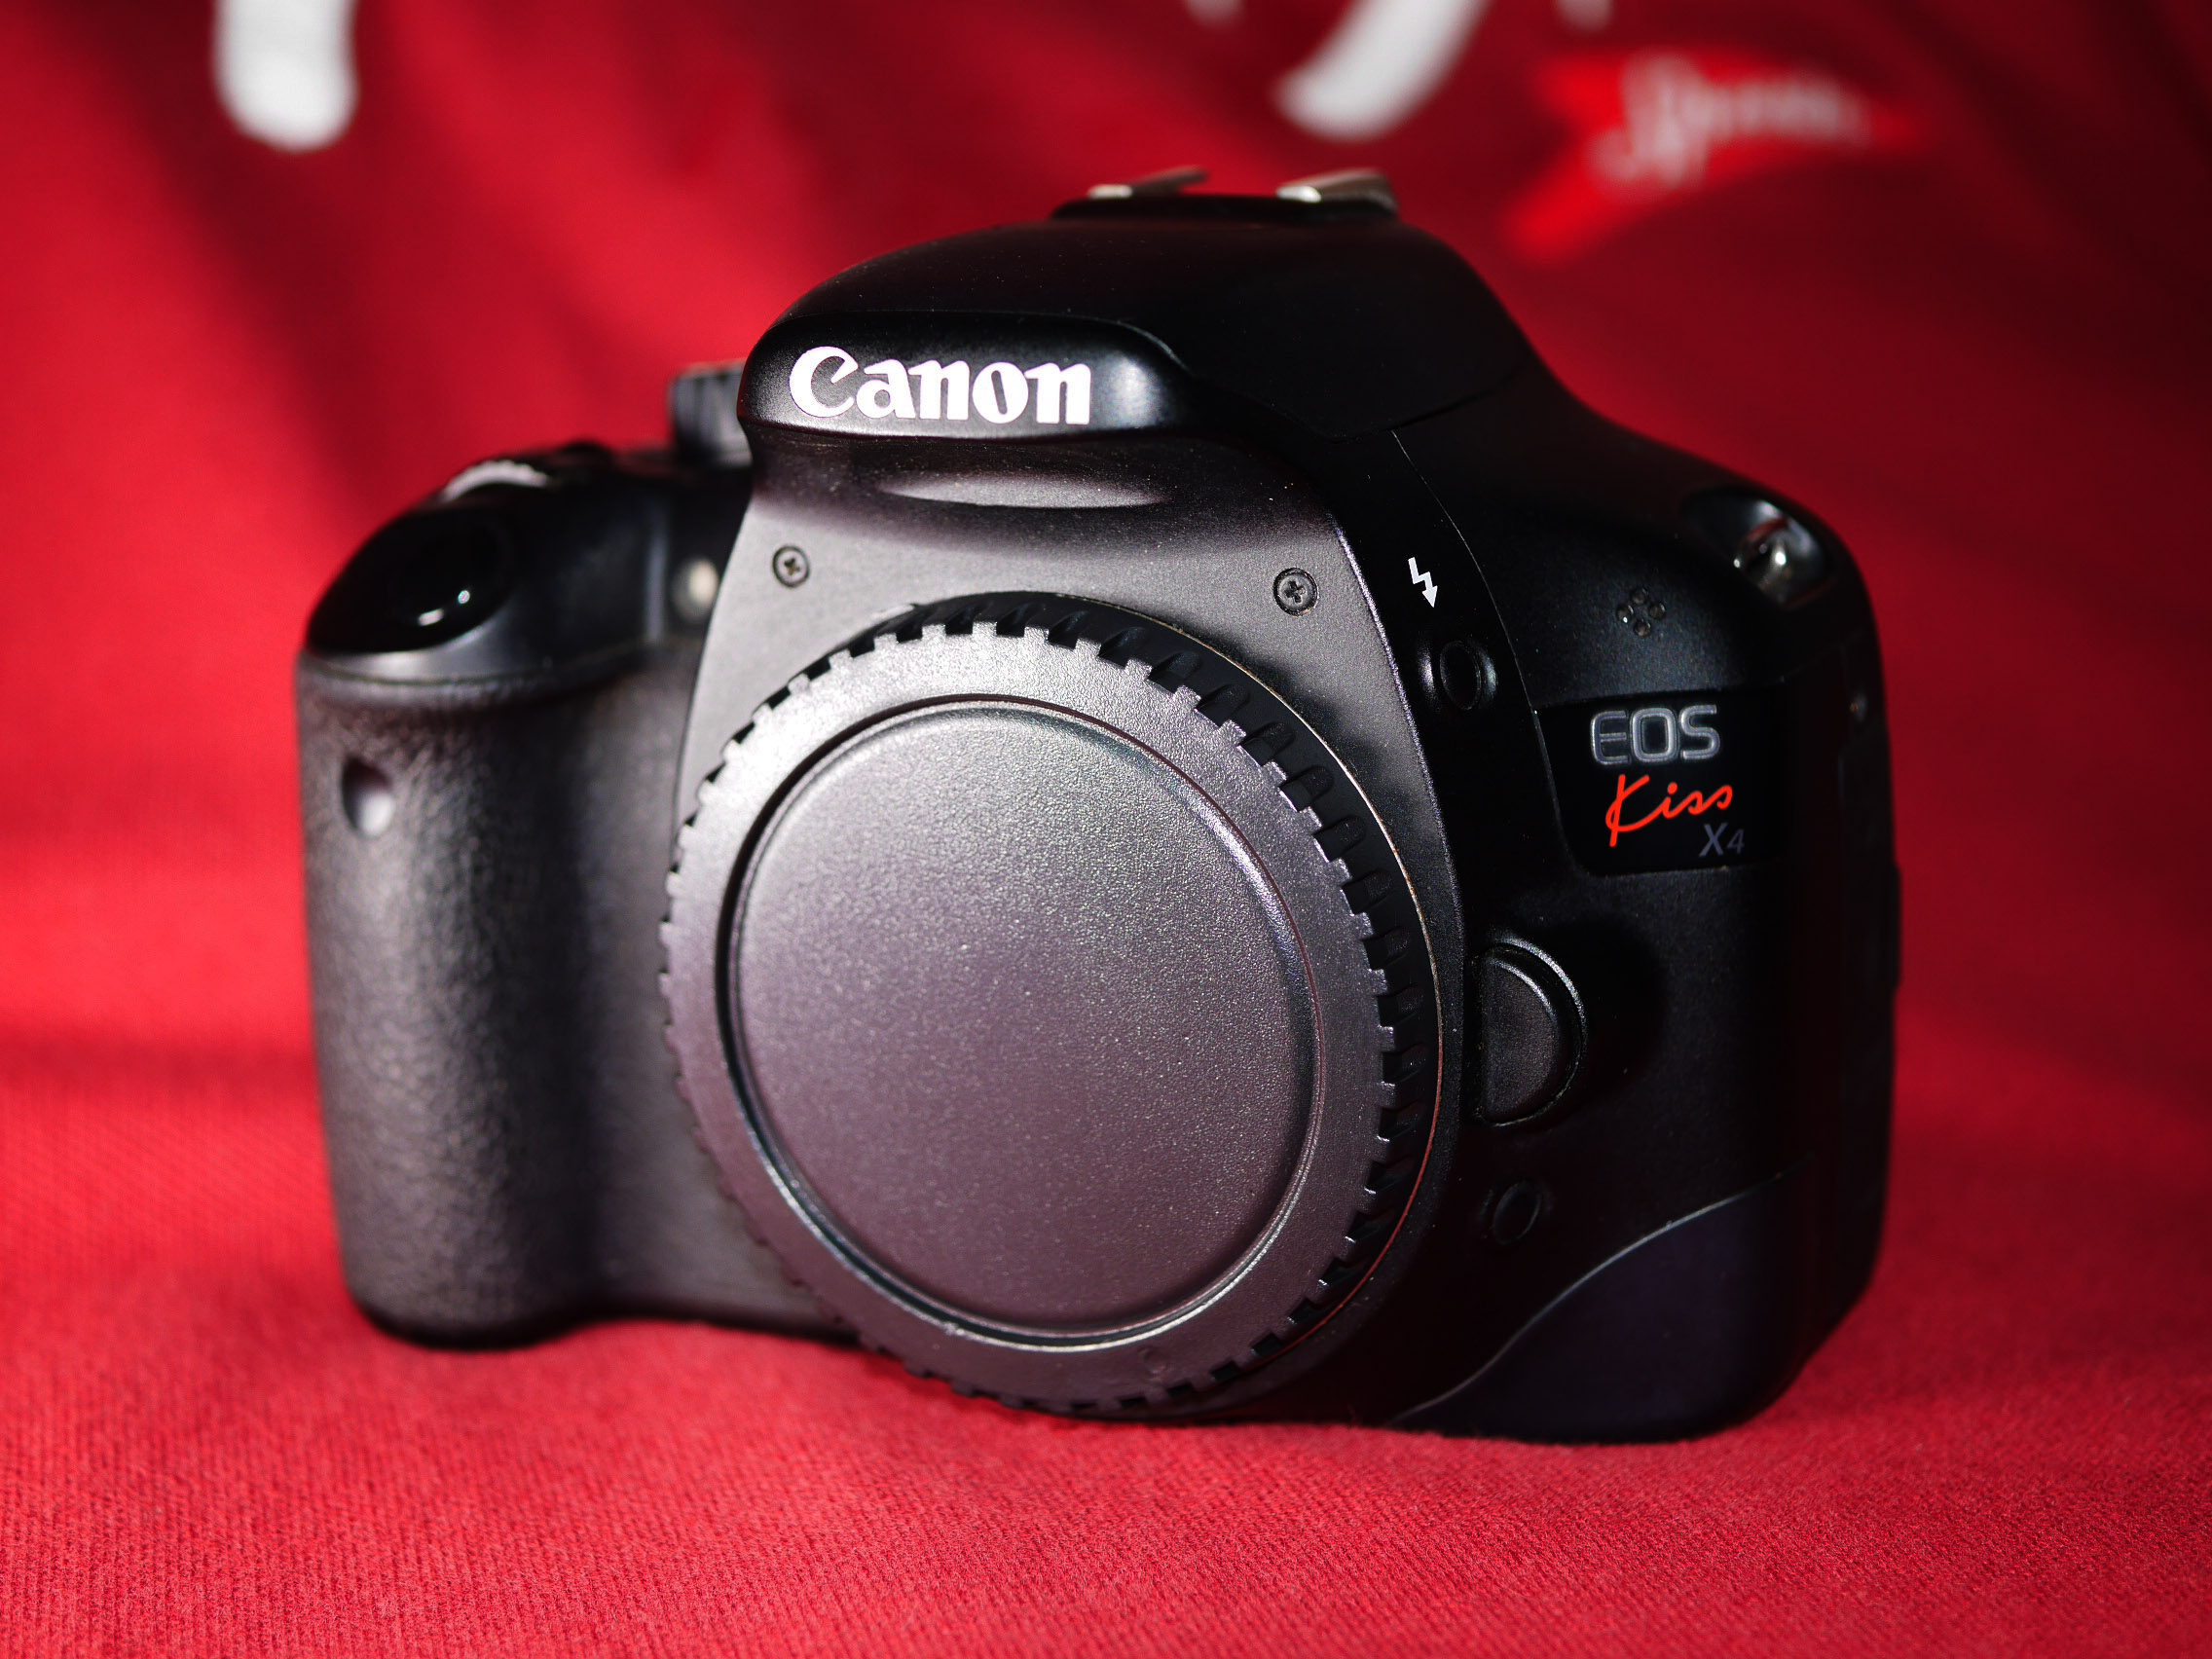 Canon EOS Kiss X4 / Rebel T2i / eos 550D DSLR Black Body Digital camera |  Lazada.co.th